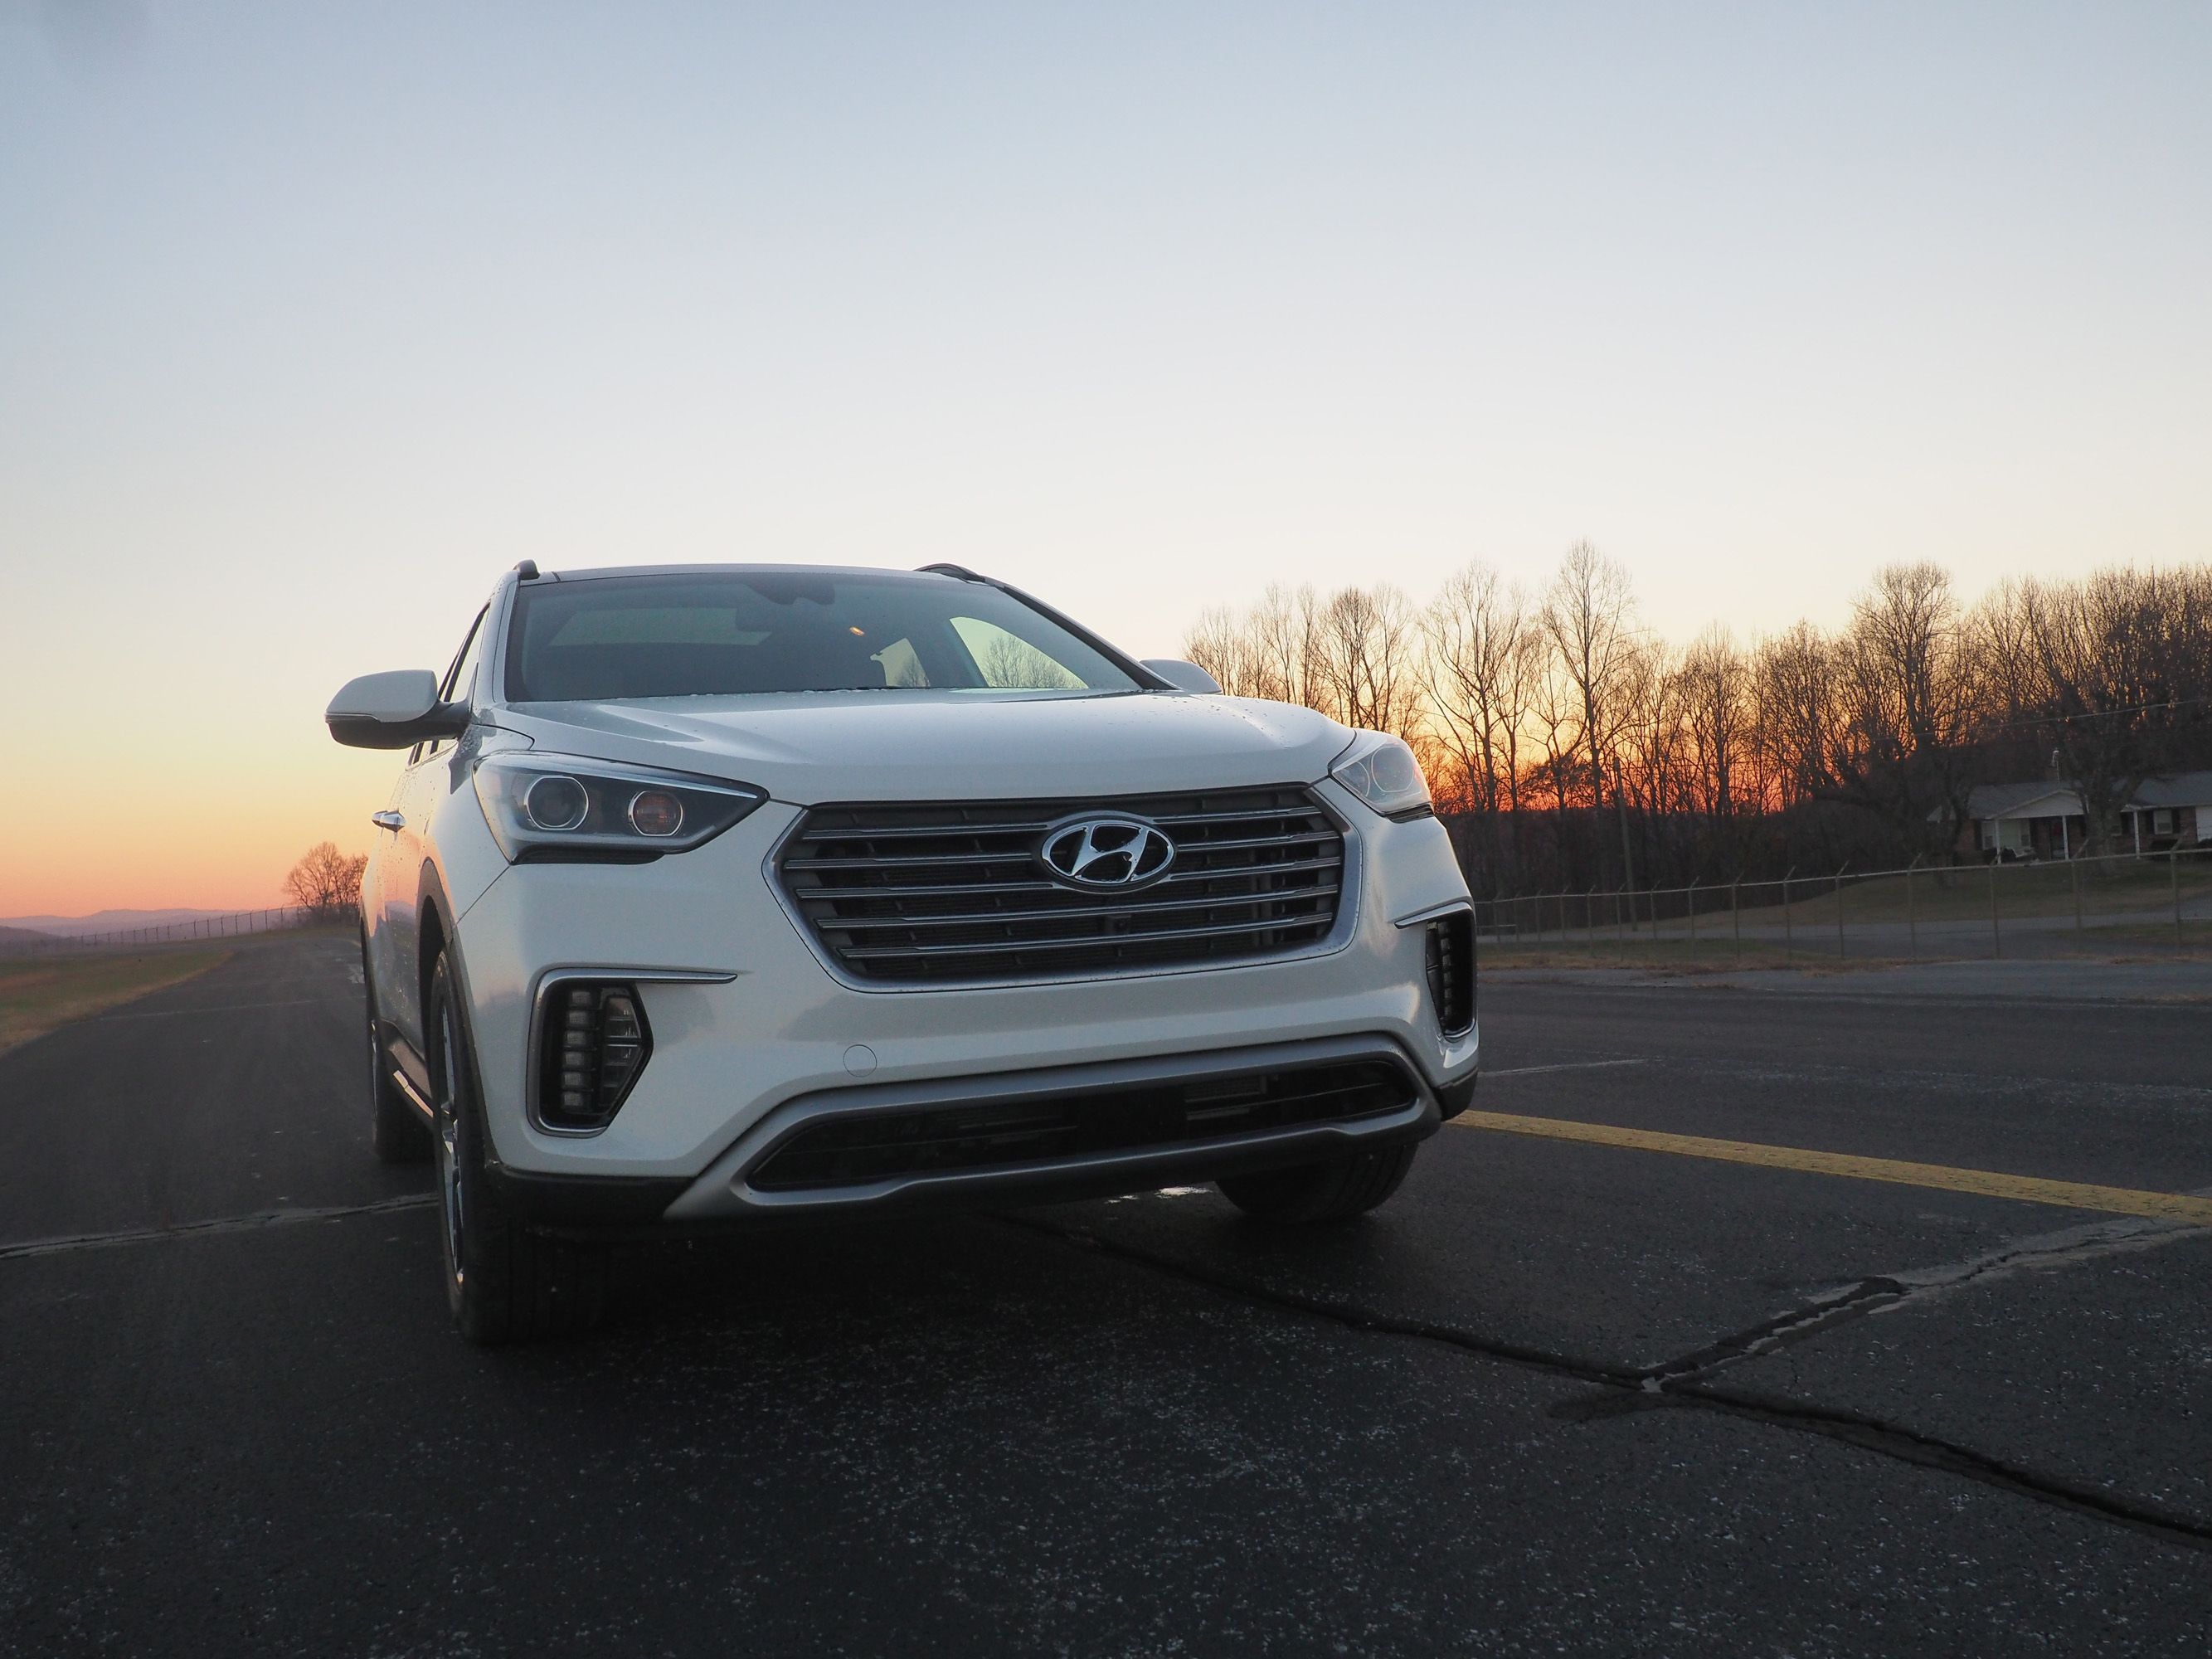 2017 Hyundai Santa Fe – Driven